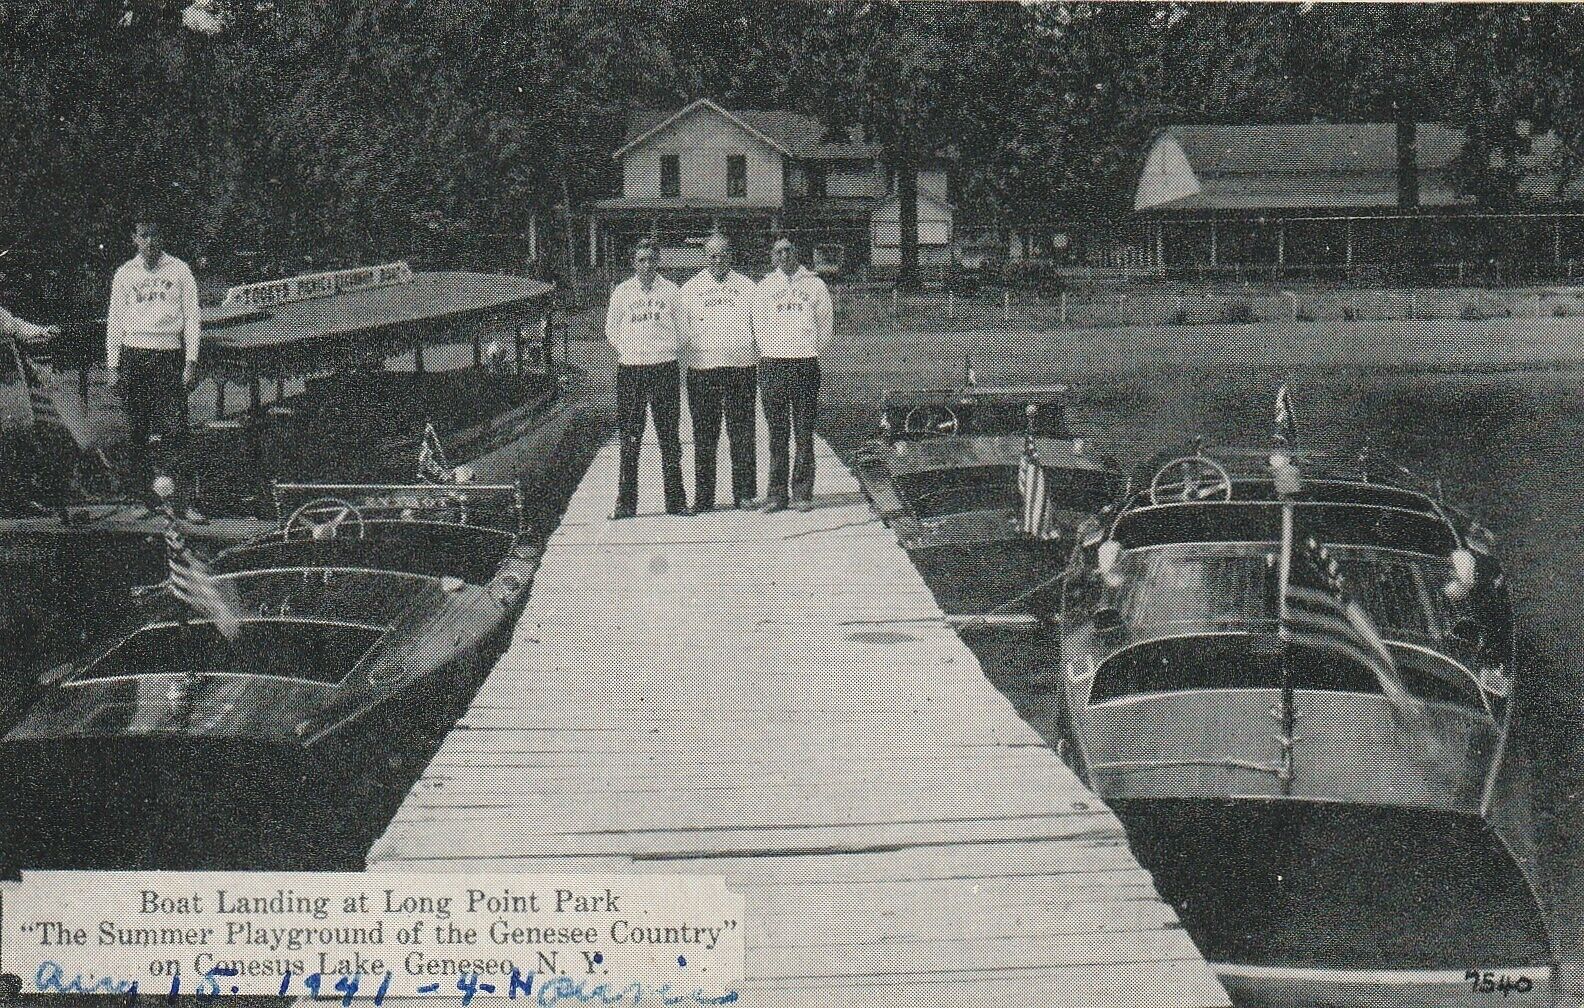 1941 Boat Landing at Long Point Park, Conesus Lake, Geneseo NY Antique Boats